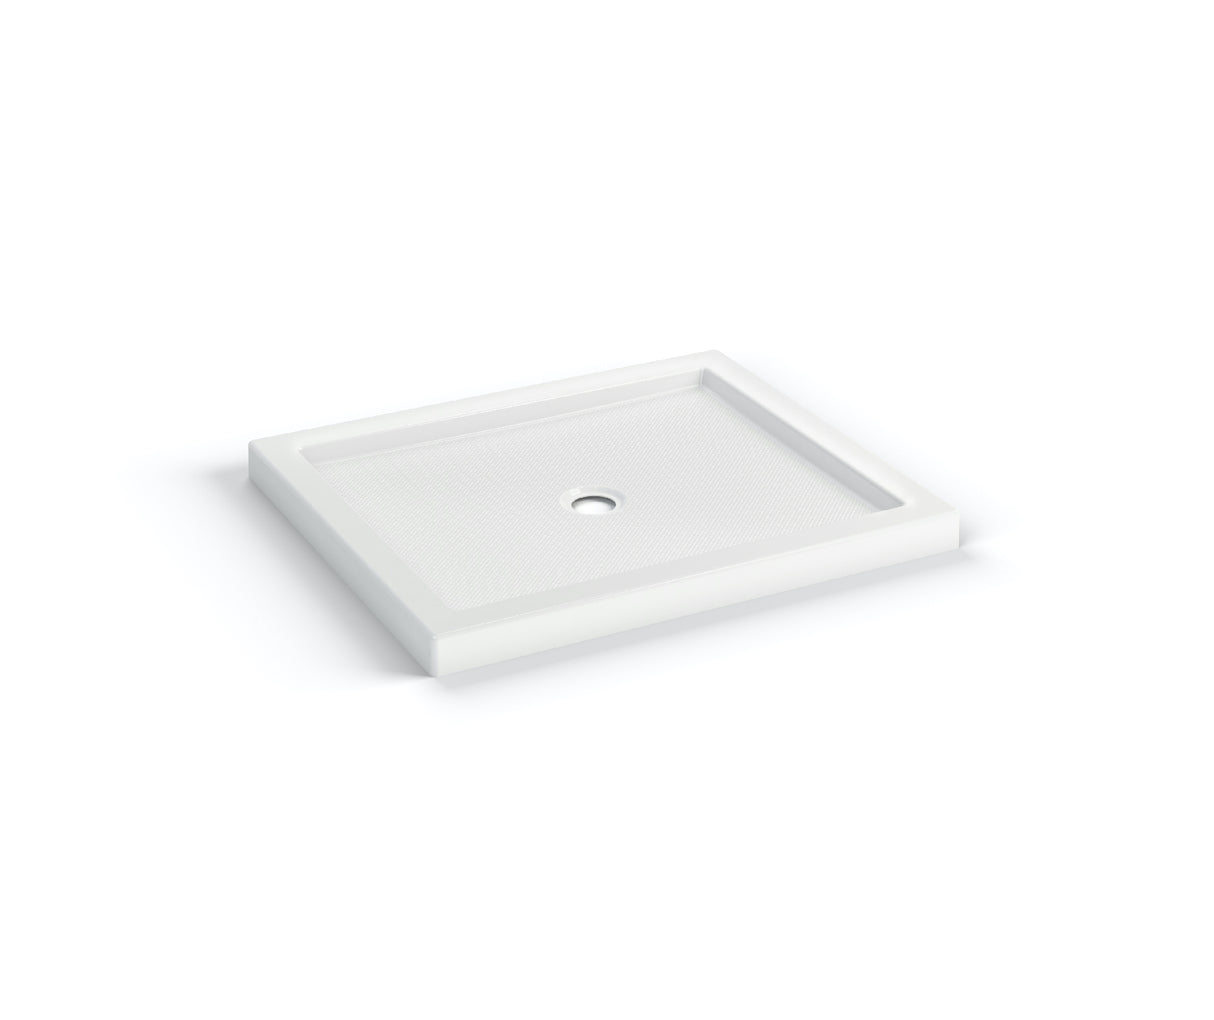 MAAX 410001-542-001-000 B3Round 4832 Acrylic Corner Left Shower Base in White with Anti-slip Bottom with Center Drain